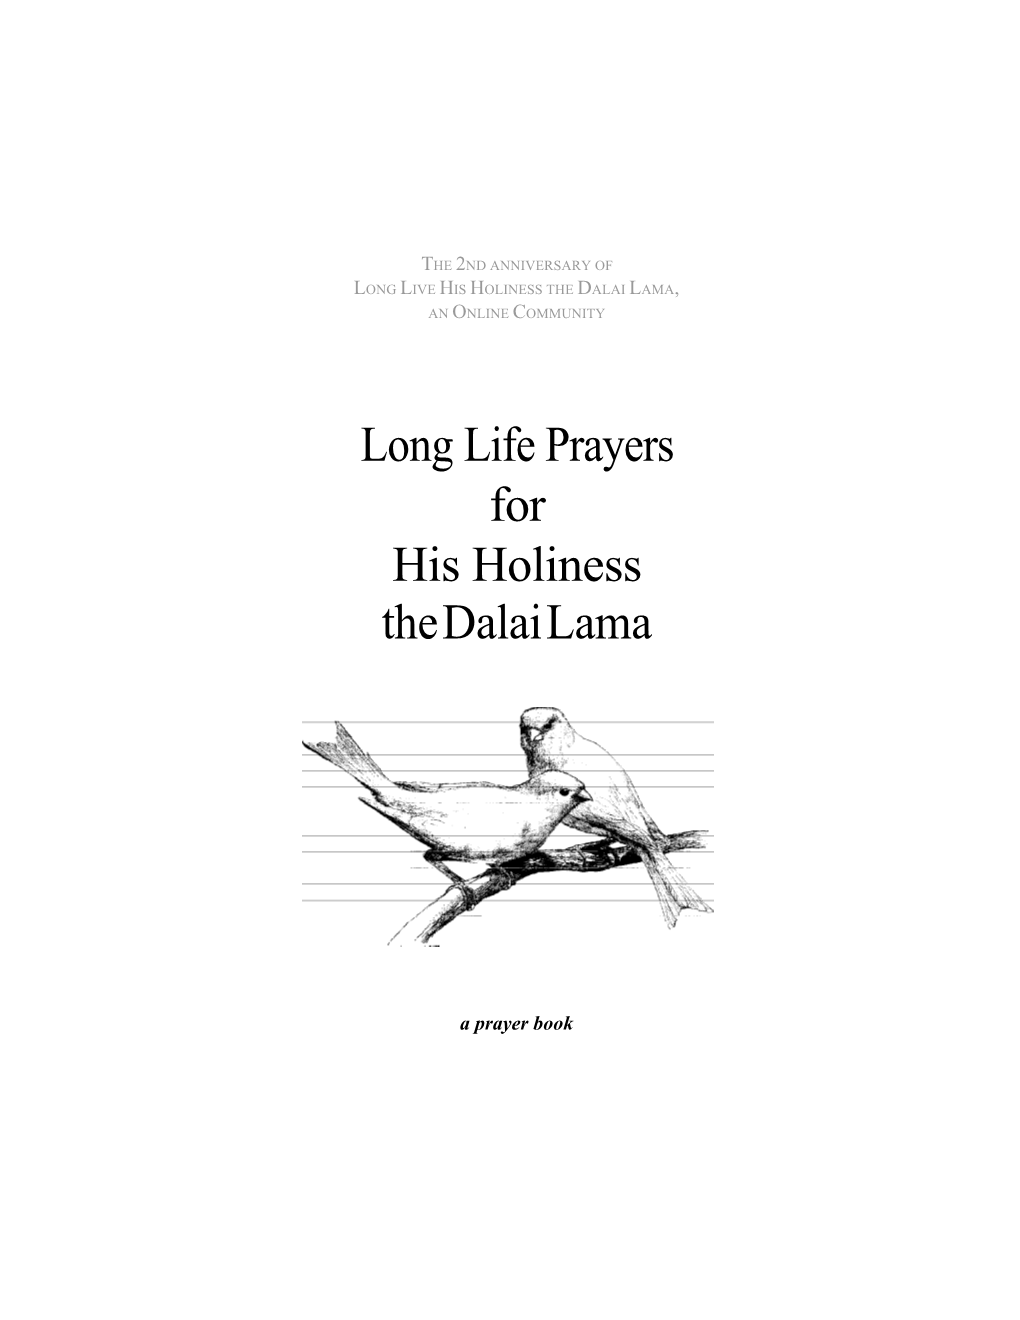 Long Life Prayers for His Holiness the Dalai Lama